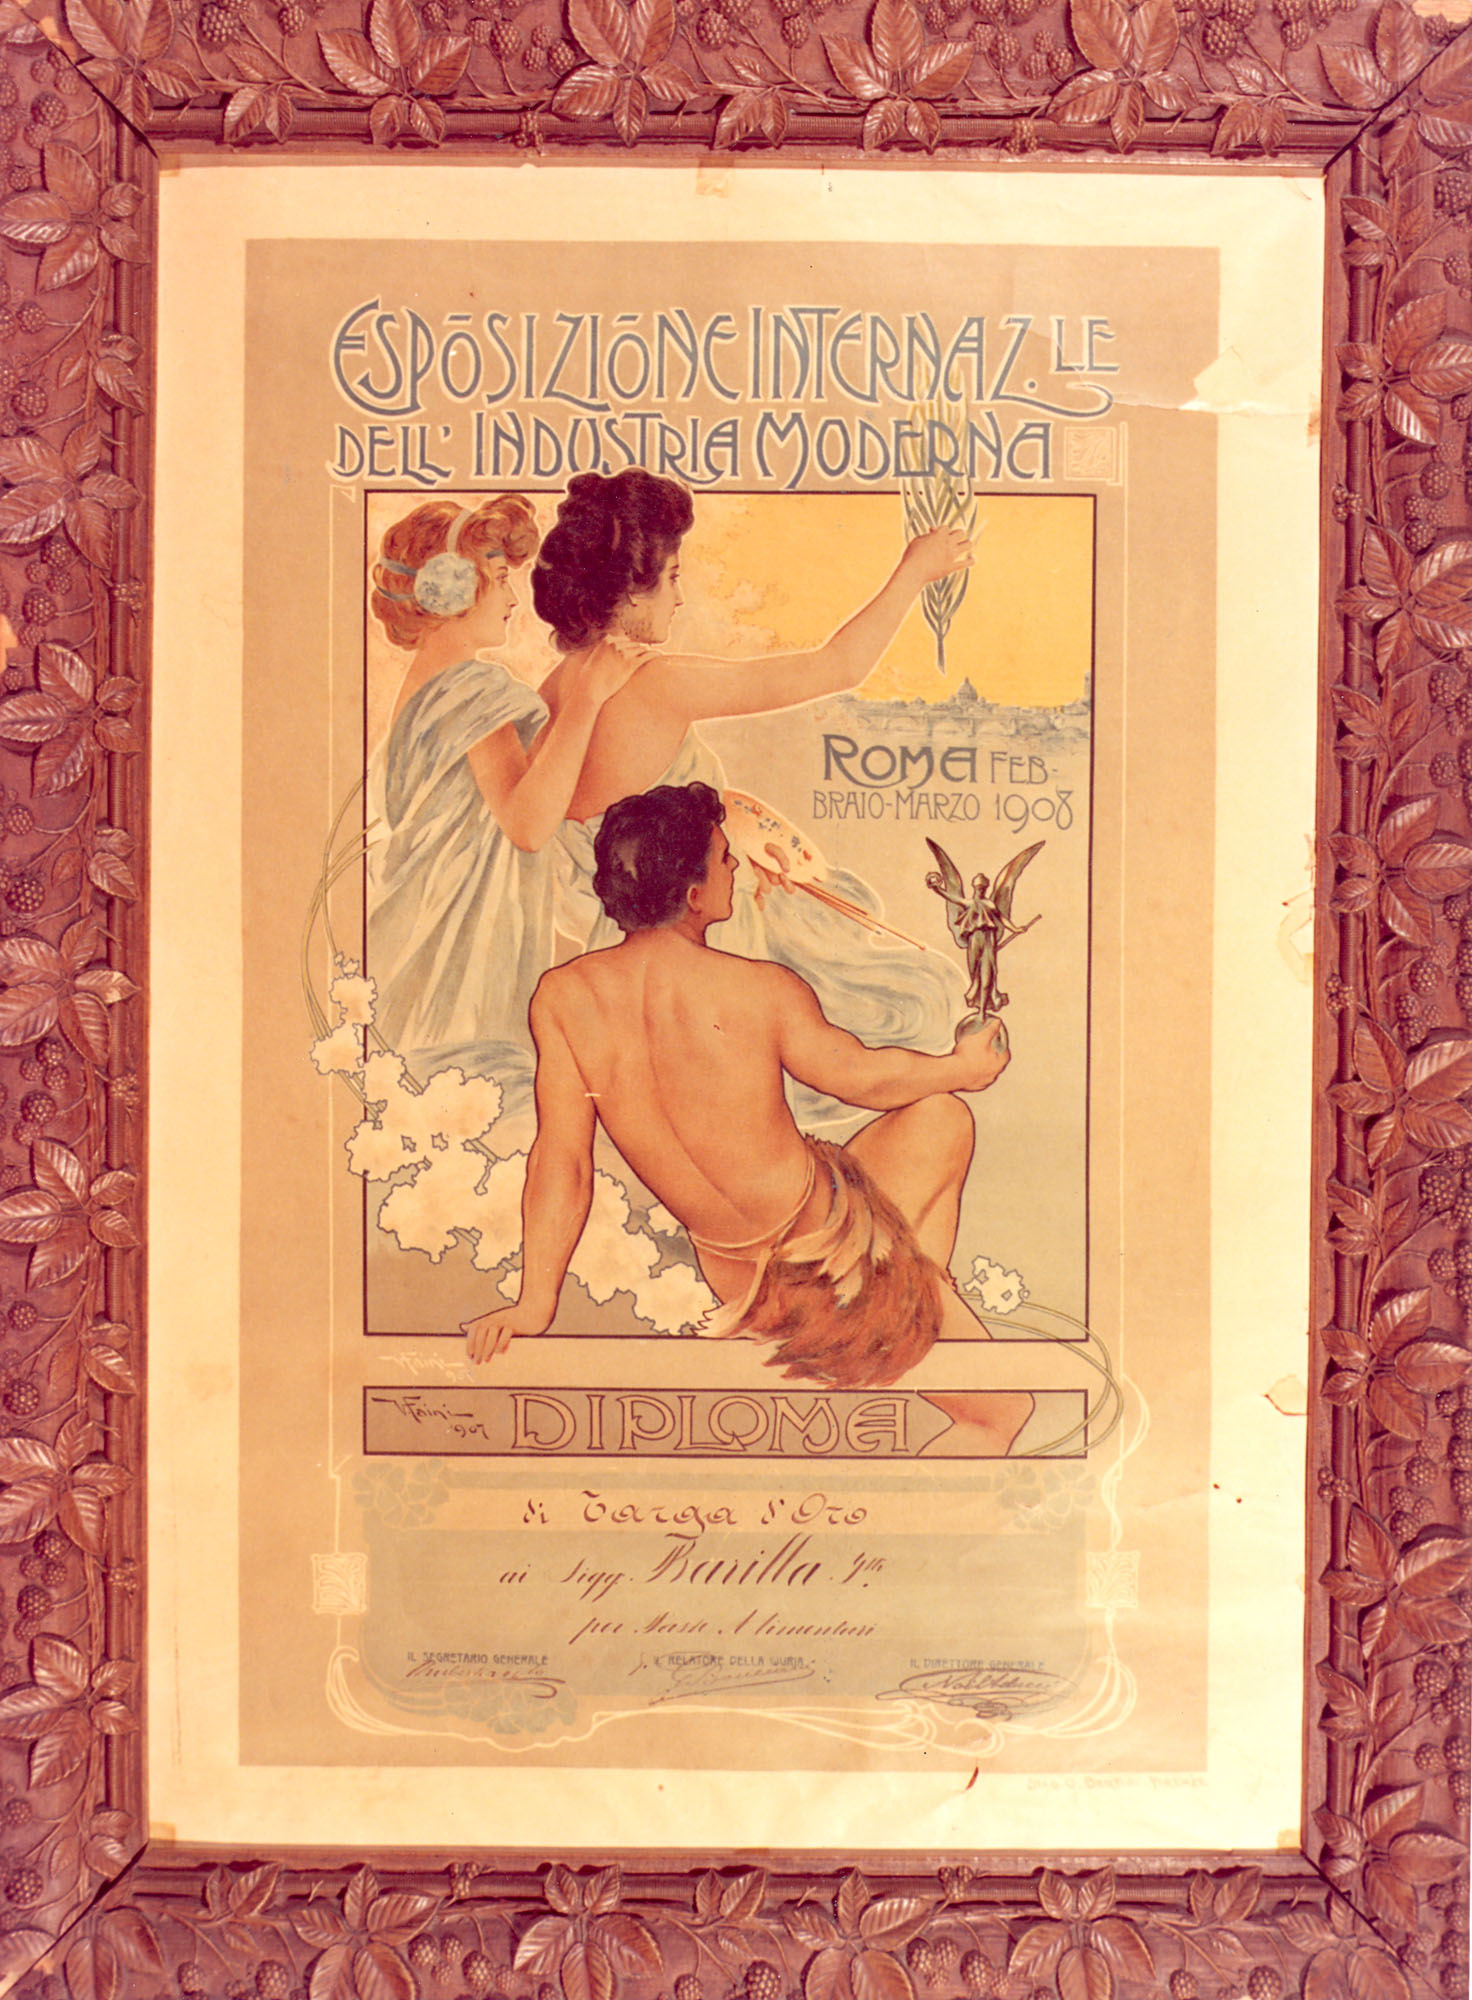 1908 - Rome, International Exhibition of the Modern Industry, Gran Targa d'Oro [Golden Plaque]  [BAR I Ha 29]